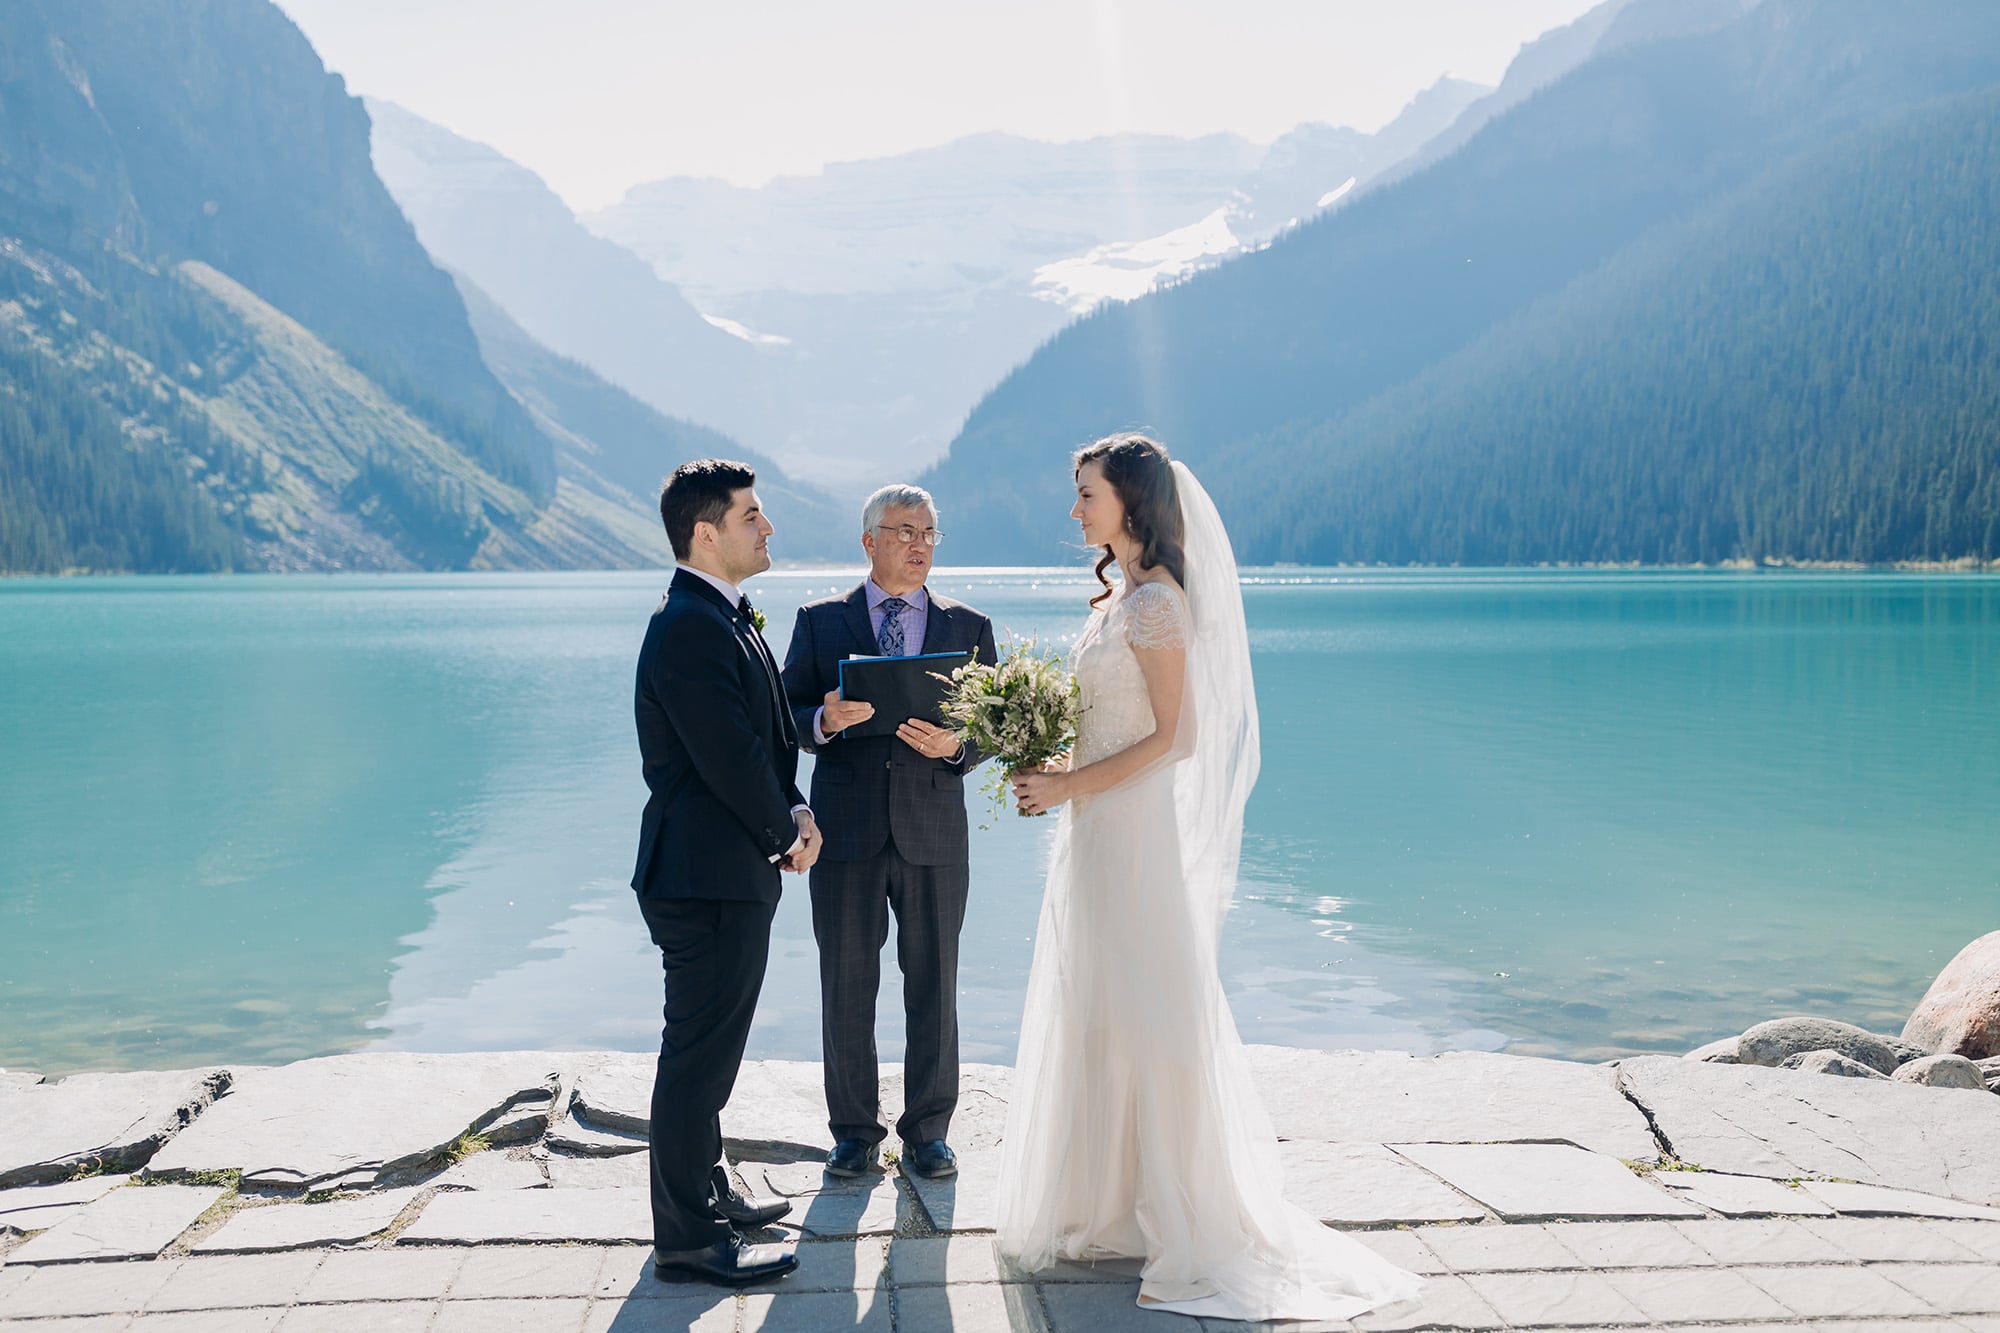 lake side wedding ceremony at Lake Louise in September